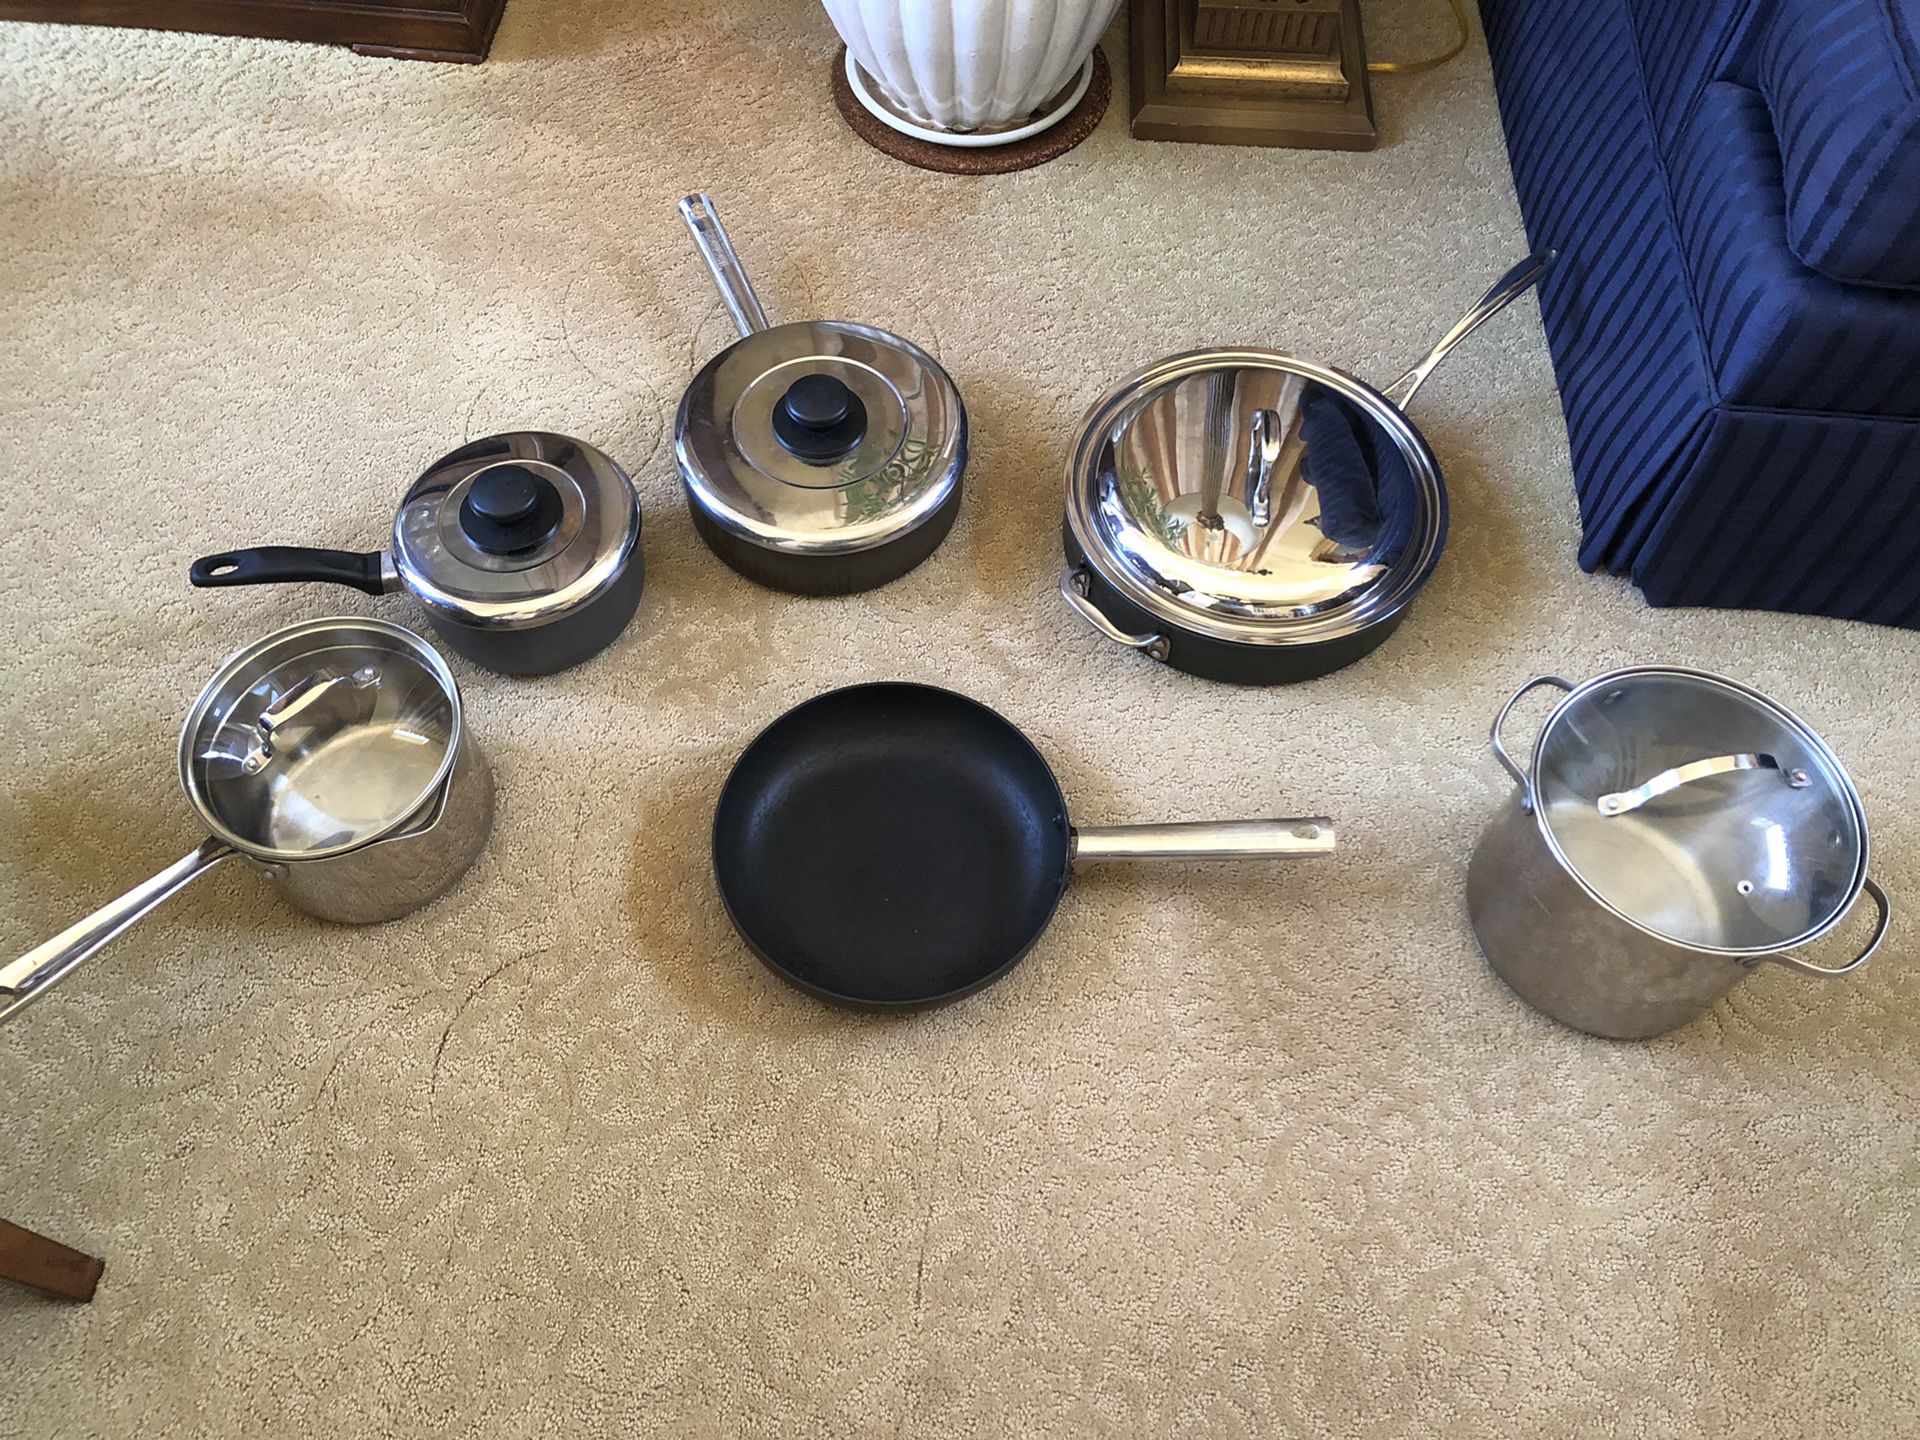 Kitchen pot and pan set